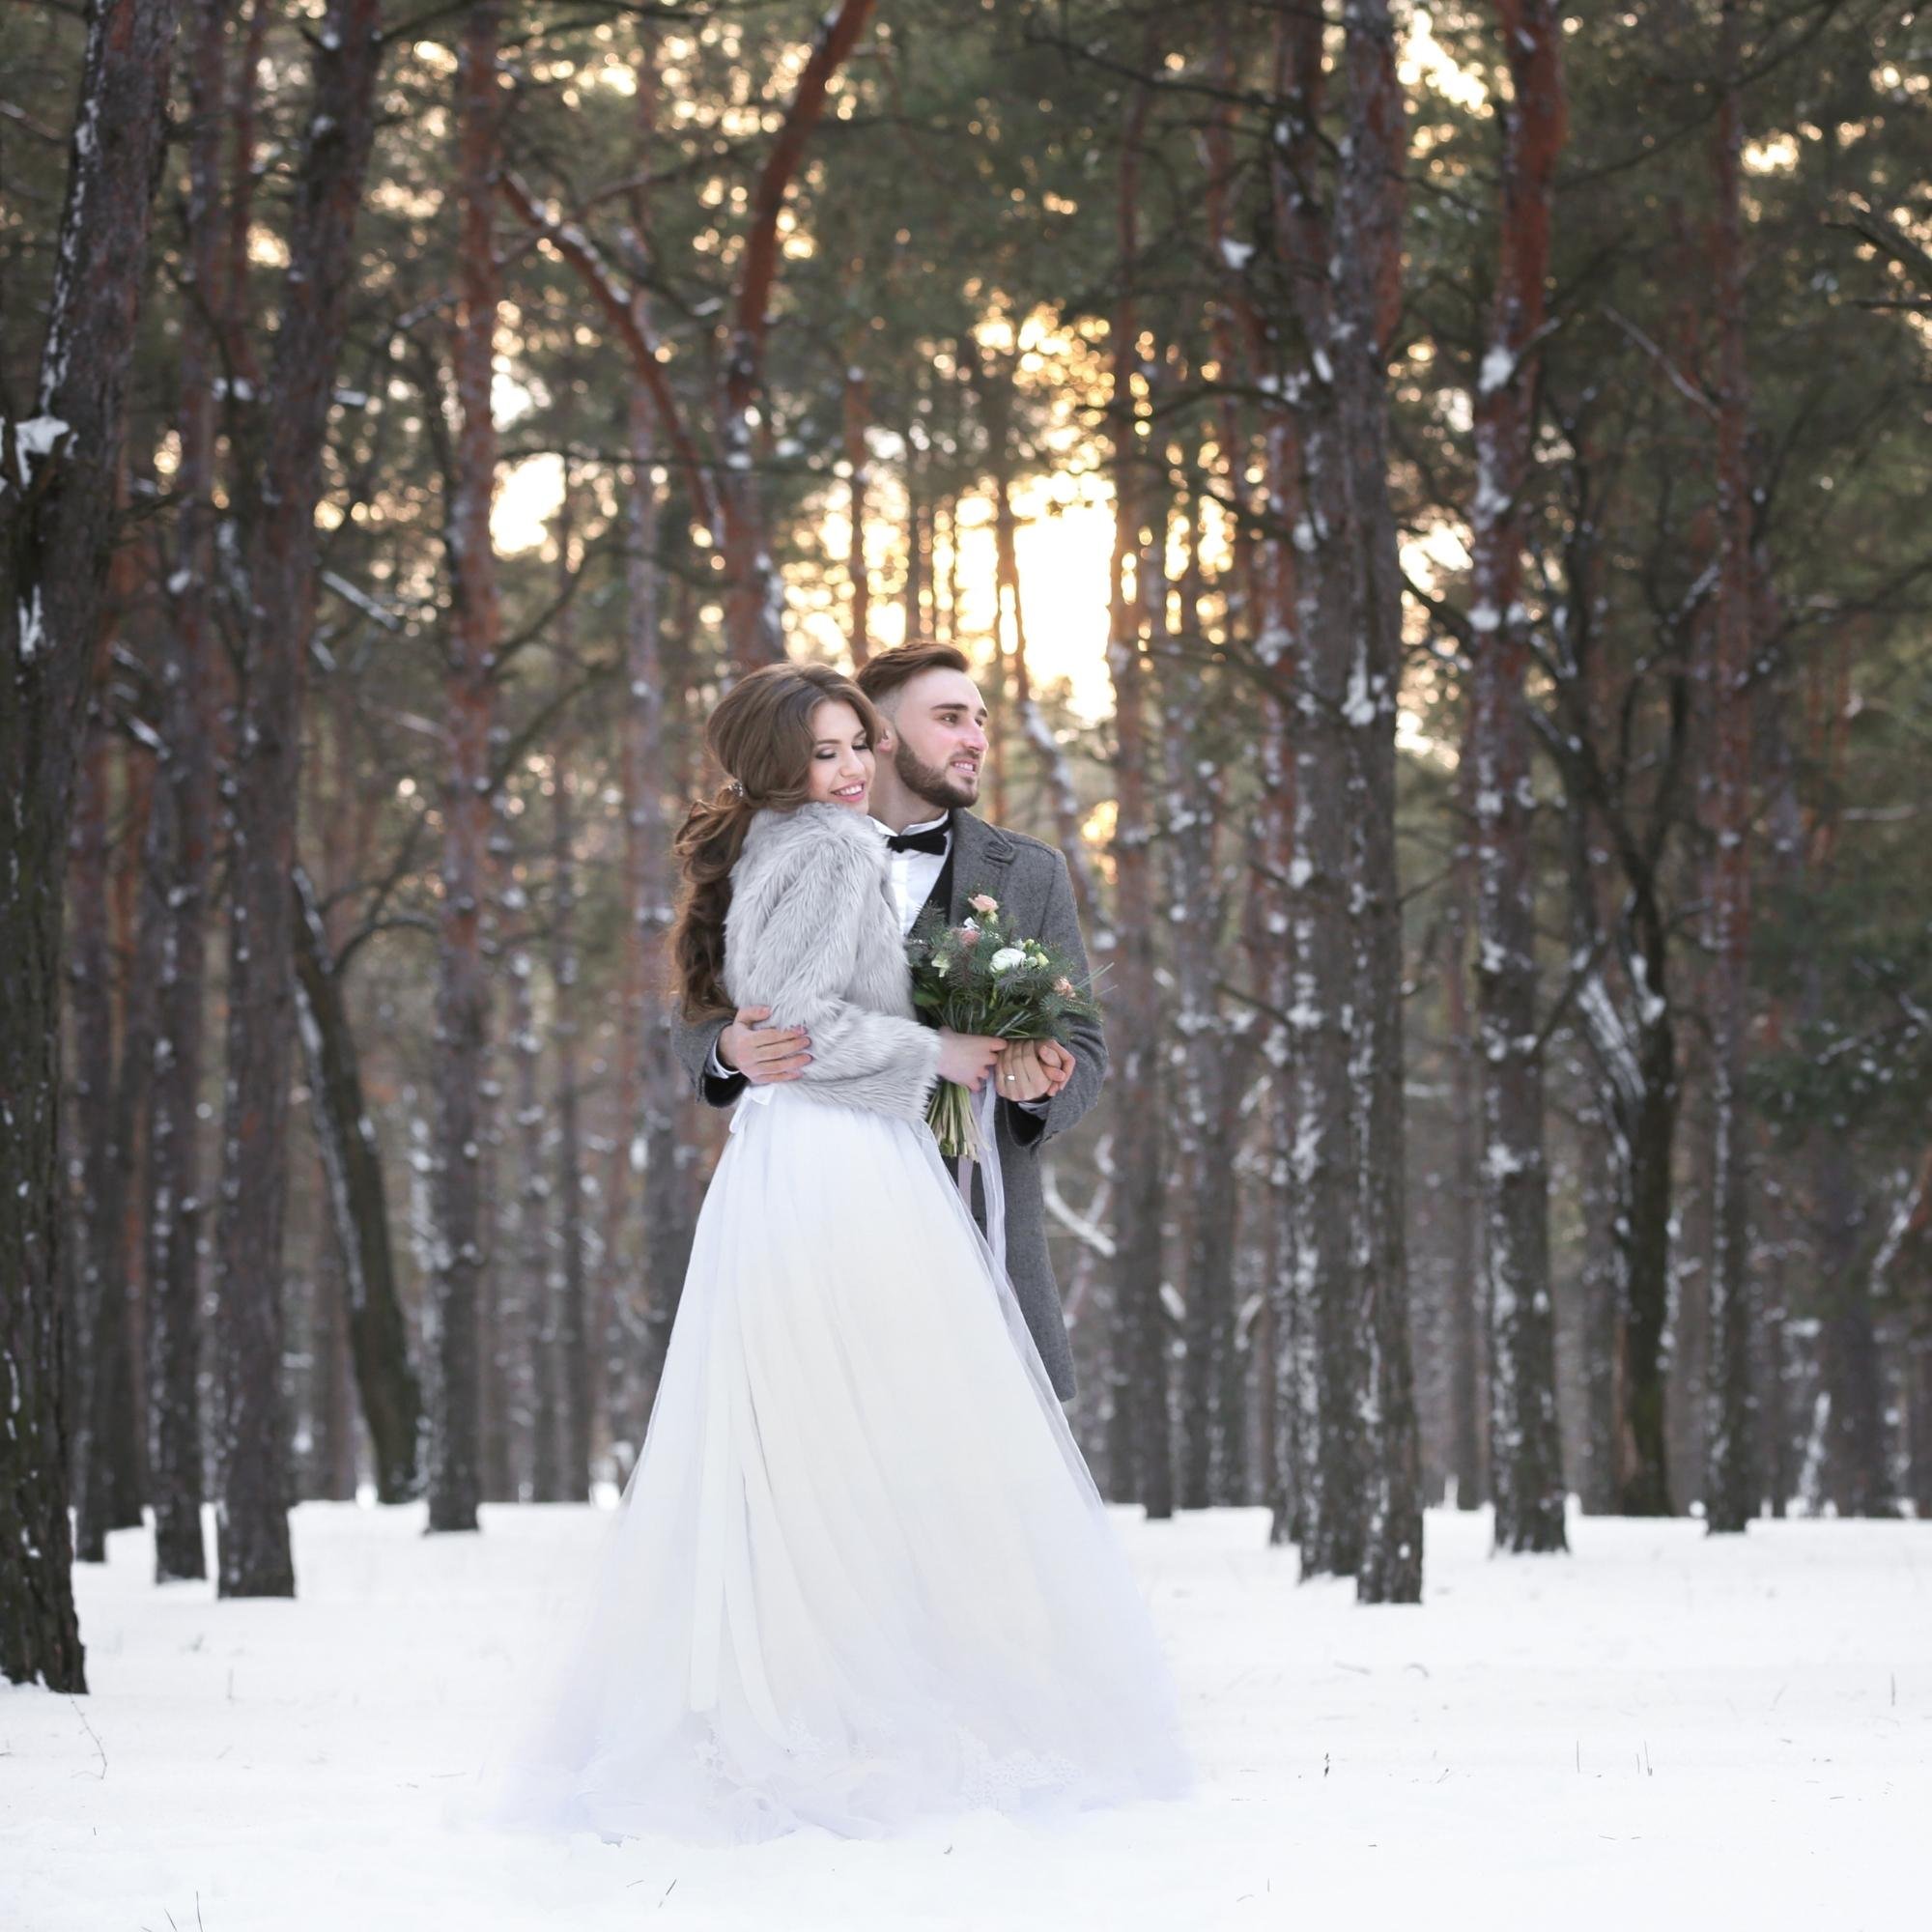 Winter wedding dress inspiration | North Lincolnshire Bridal Shop ...